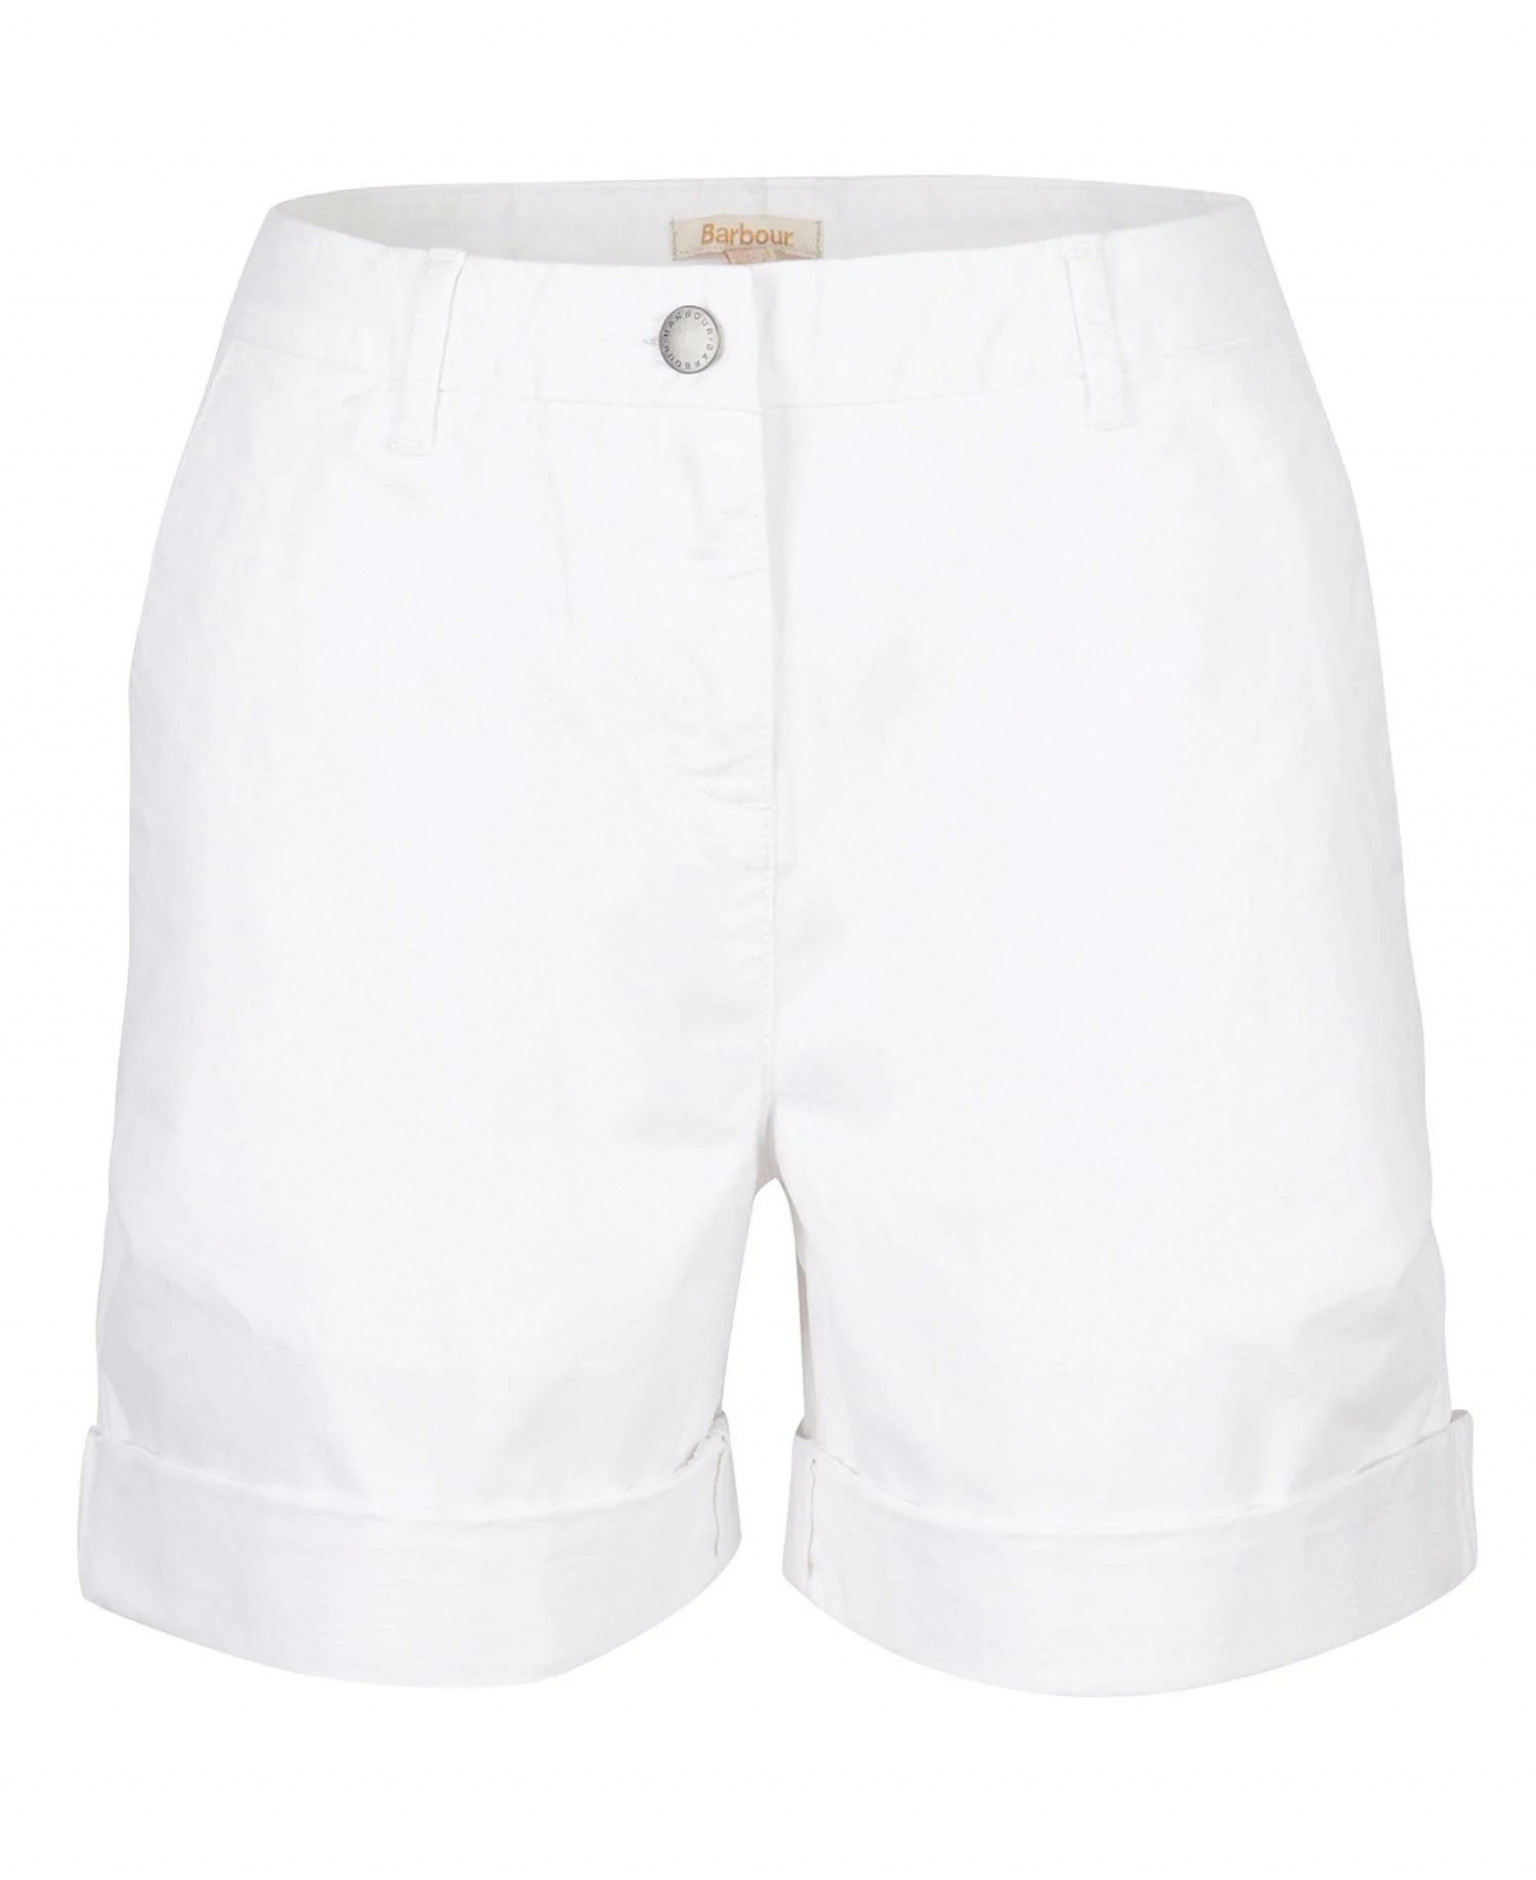 Barbour Chino Shorts White